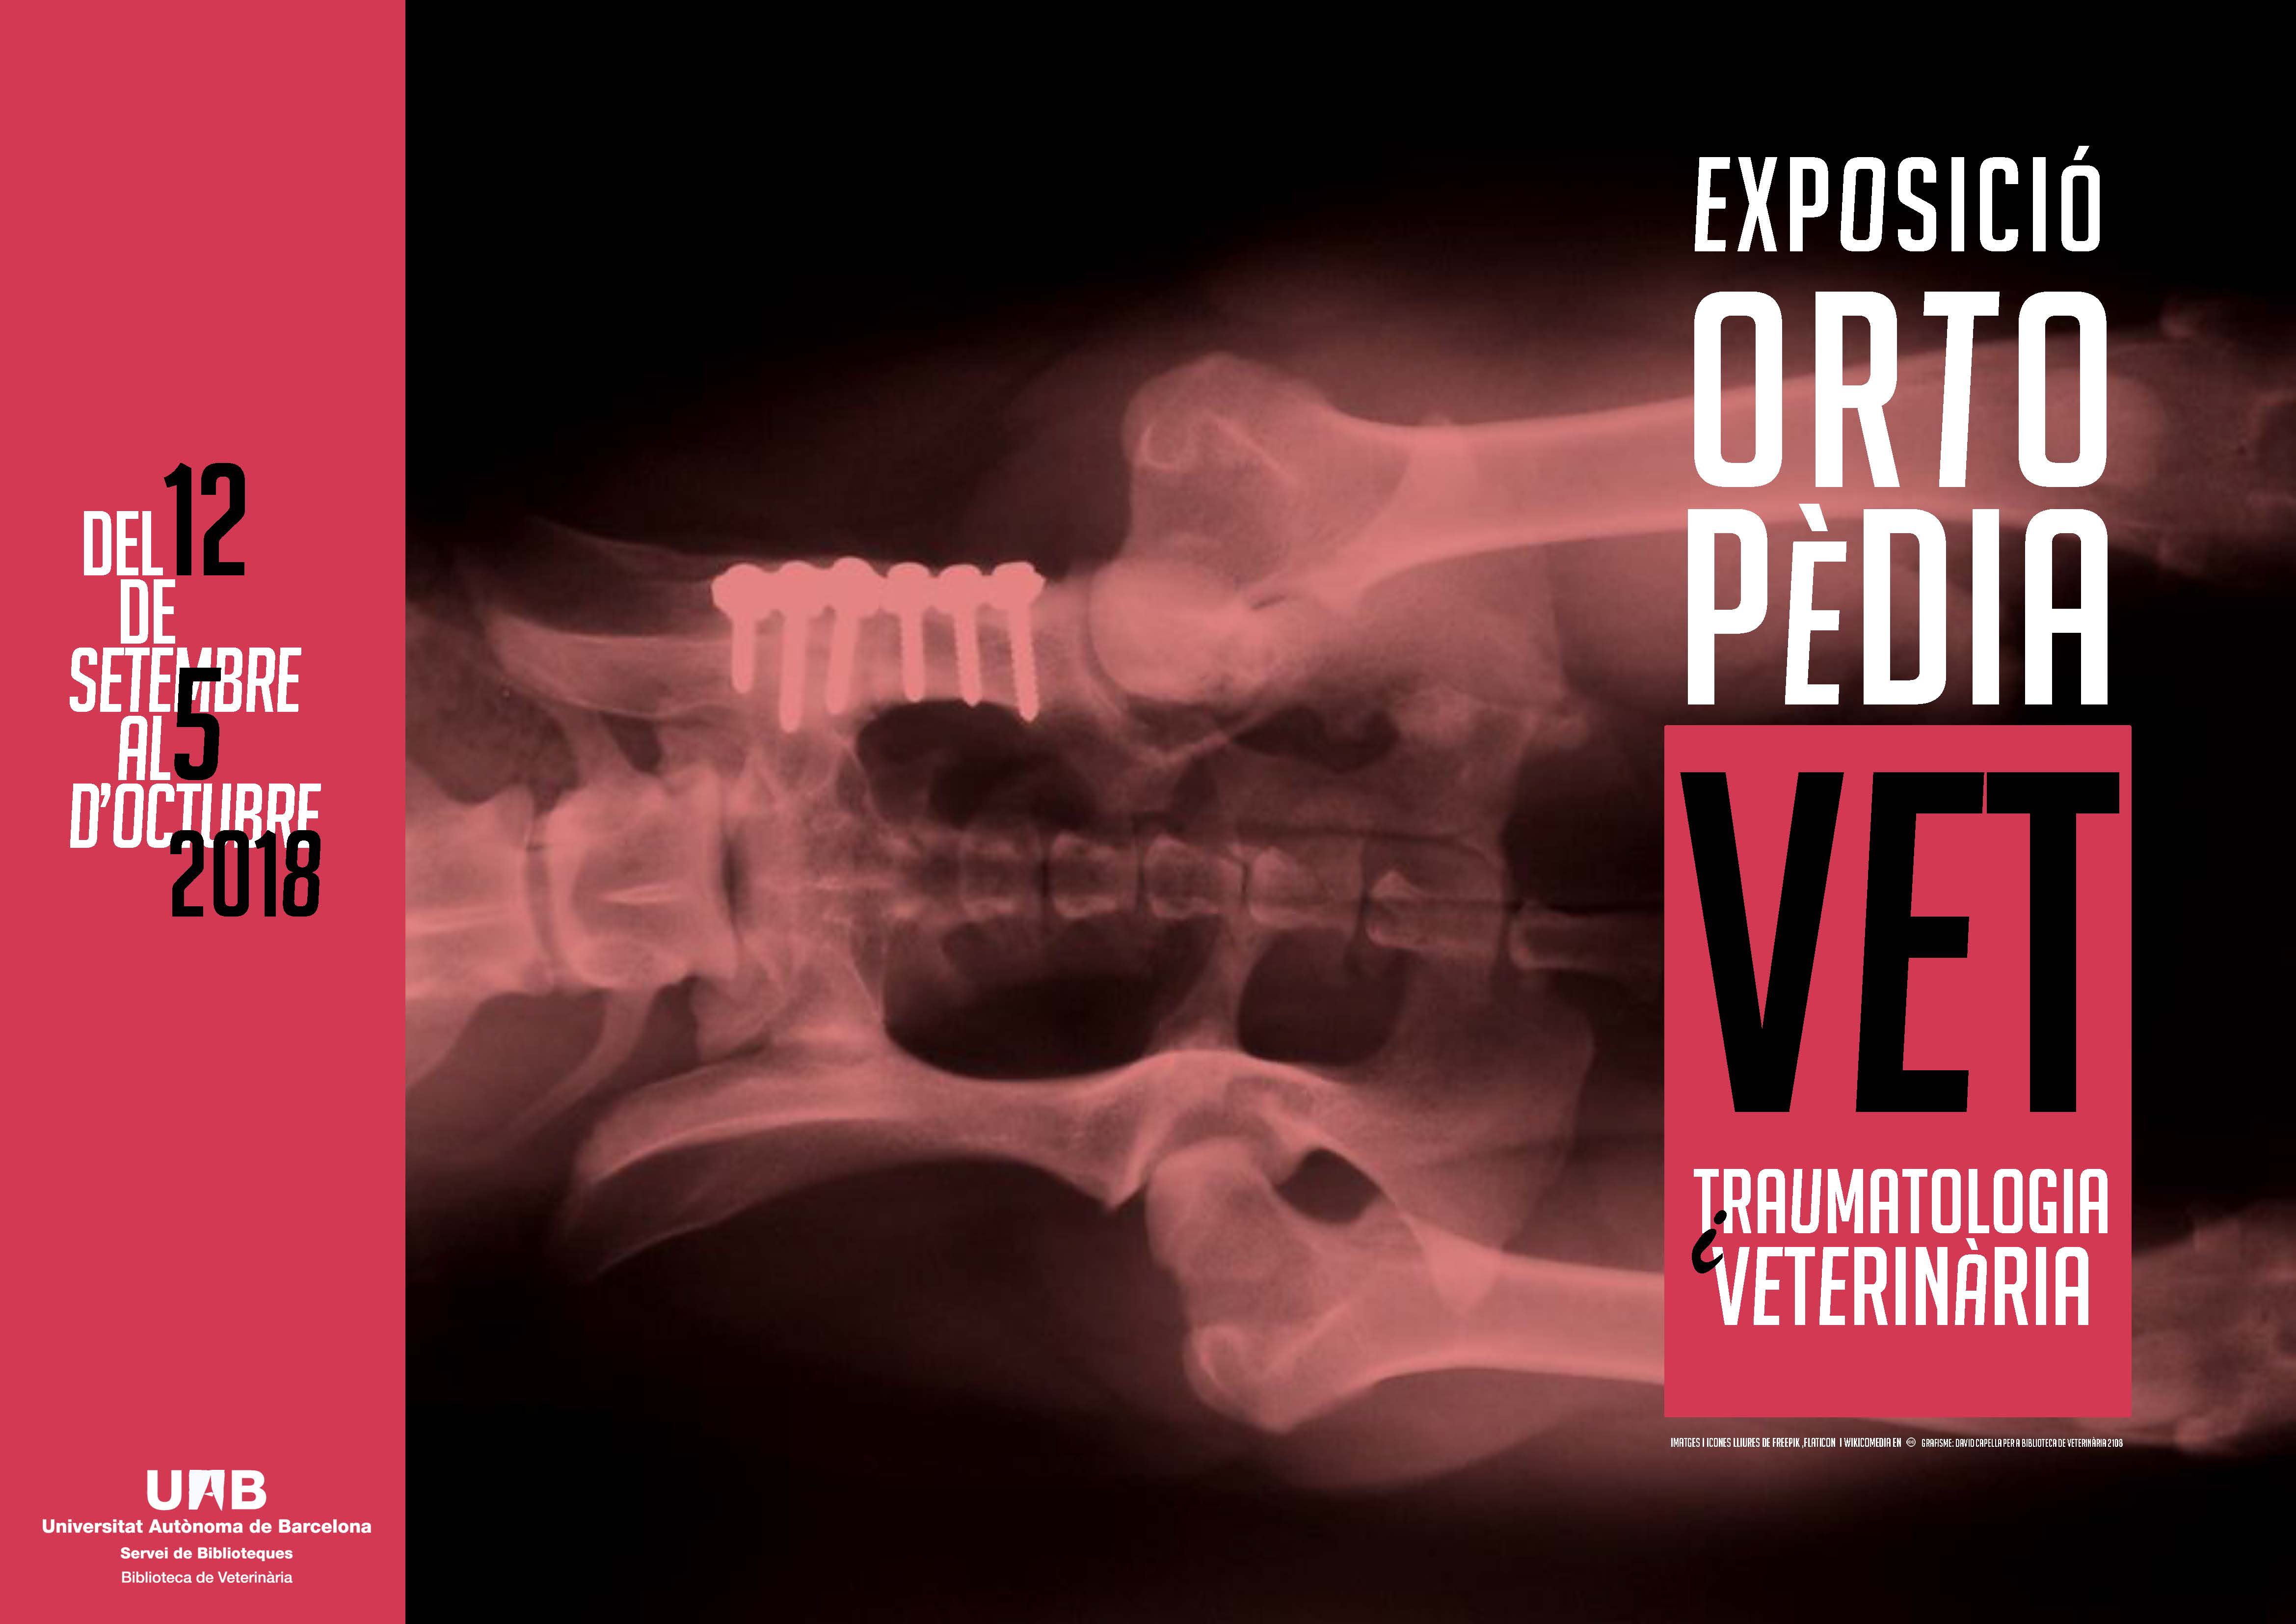 Exhibition Veterinary orthopedics and traumatology 2018